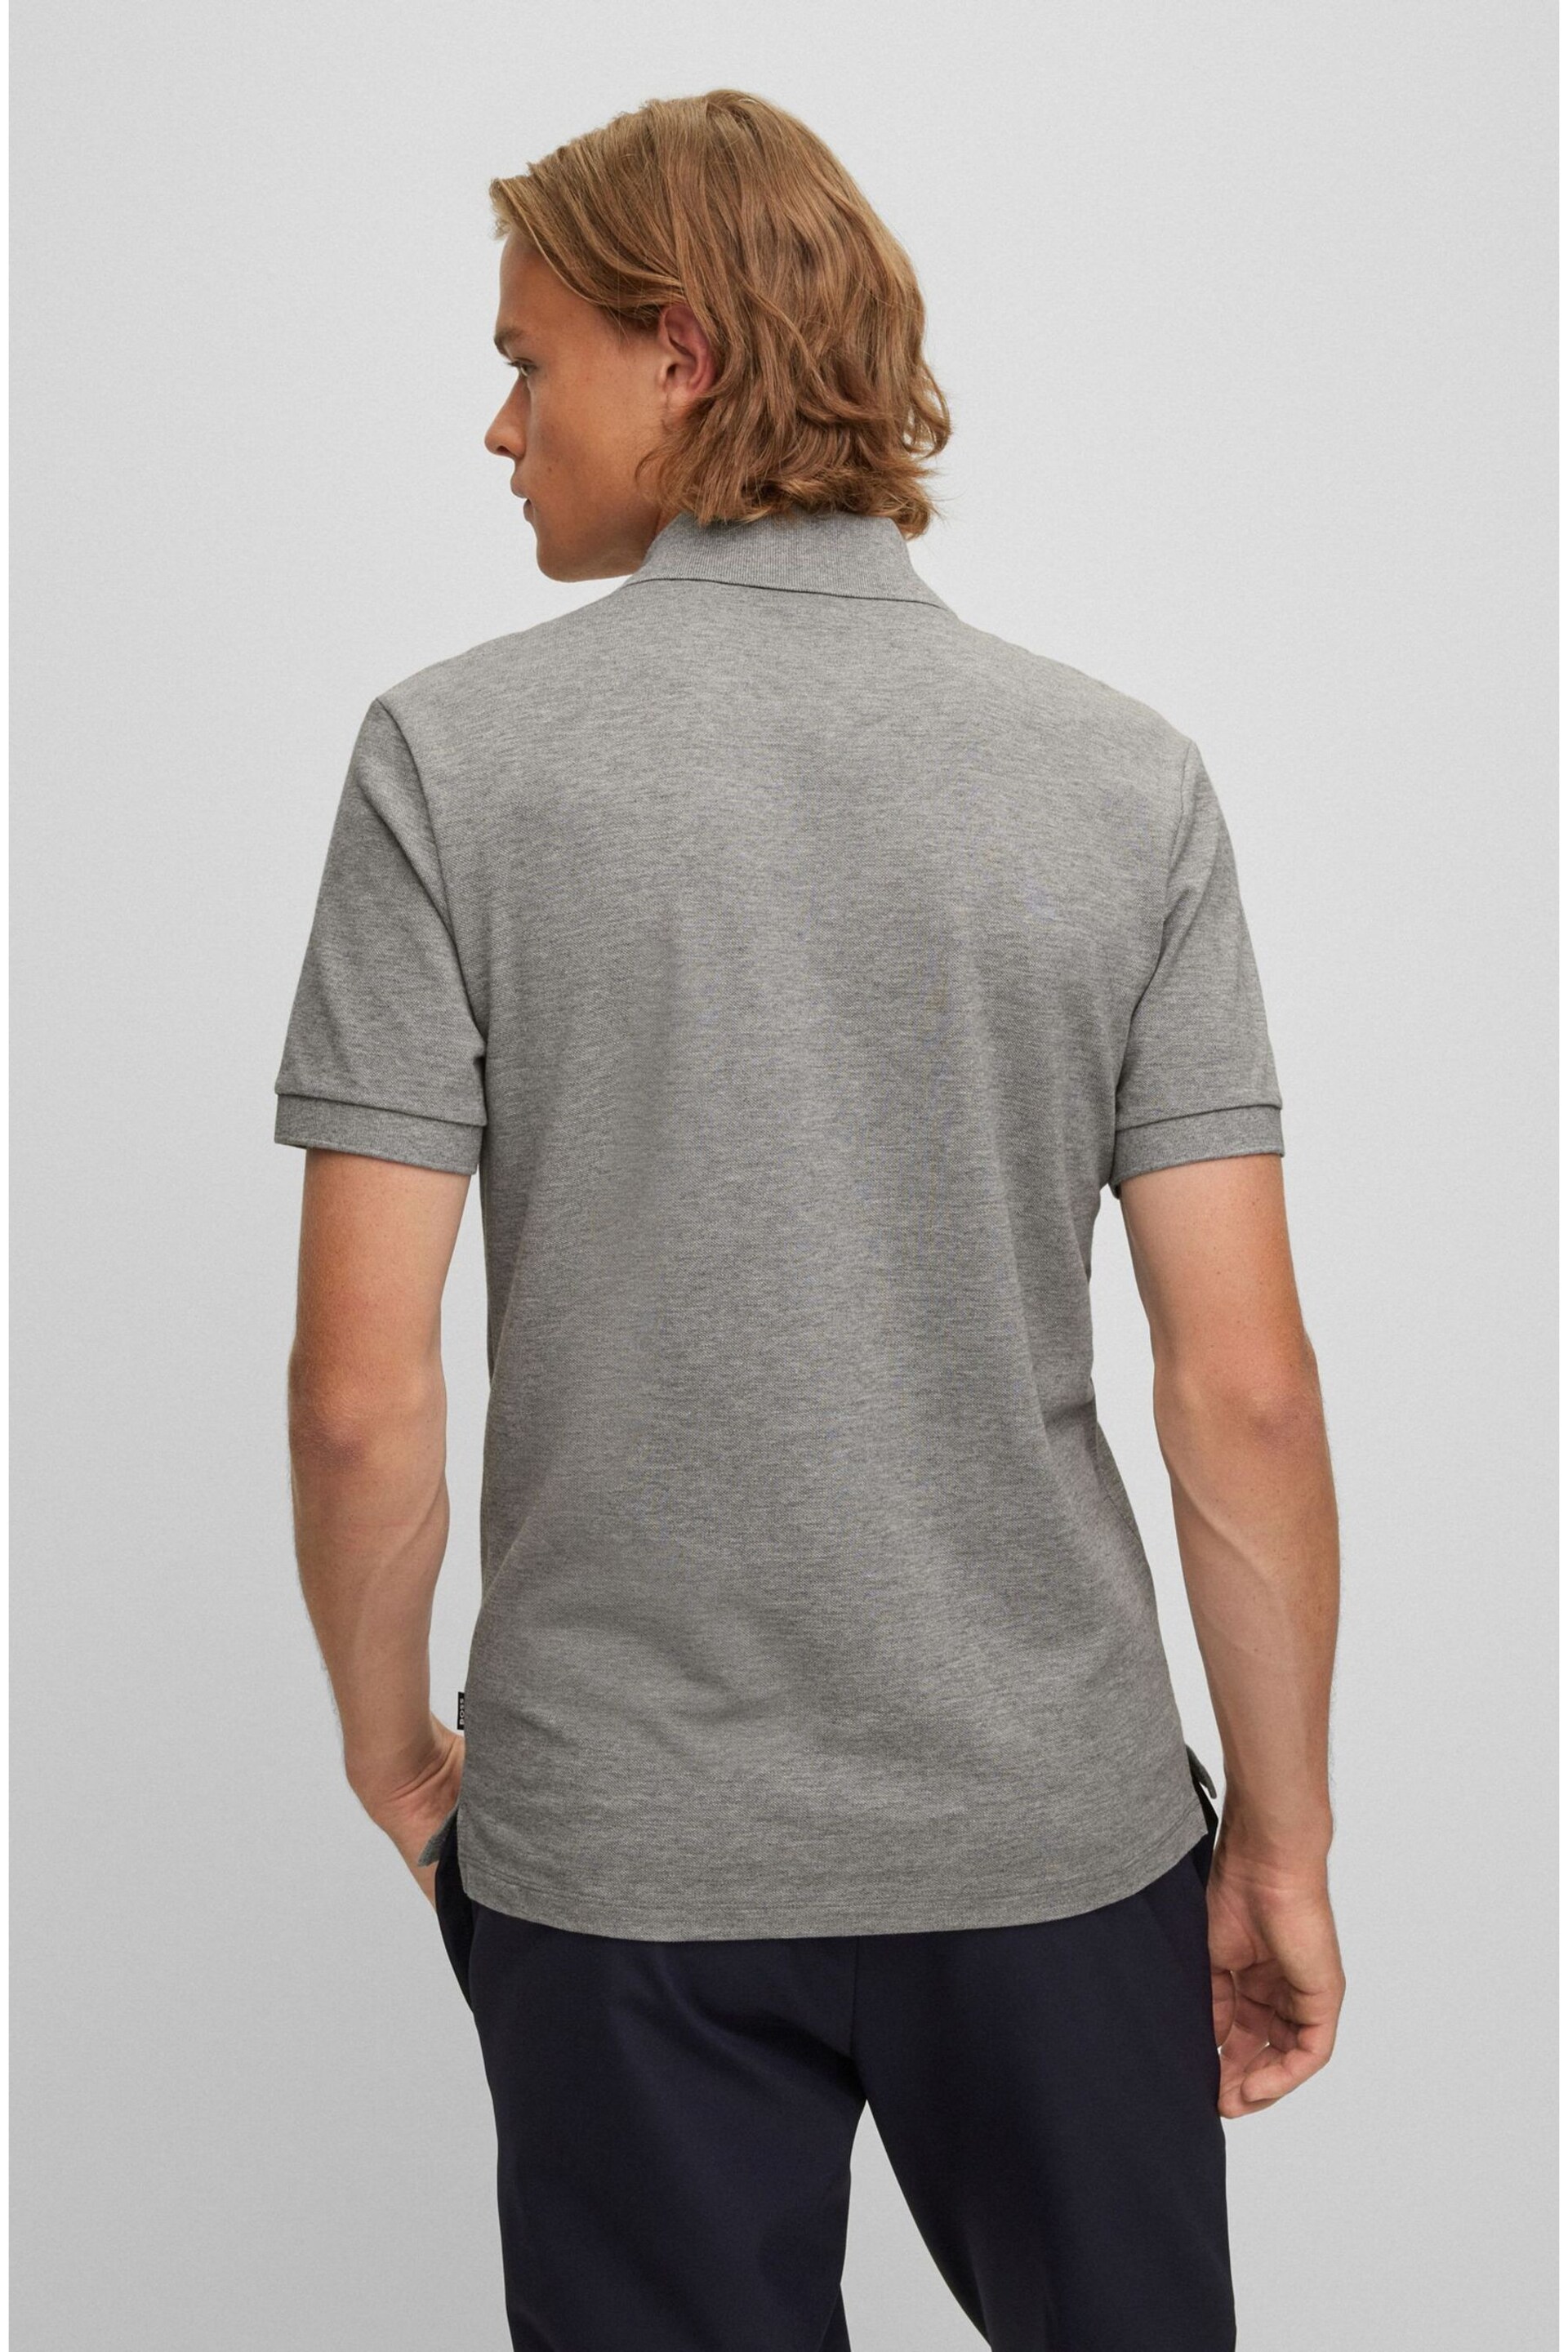 BOSS Grey Pallas Polo Shirt - Image 2 of 5